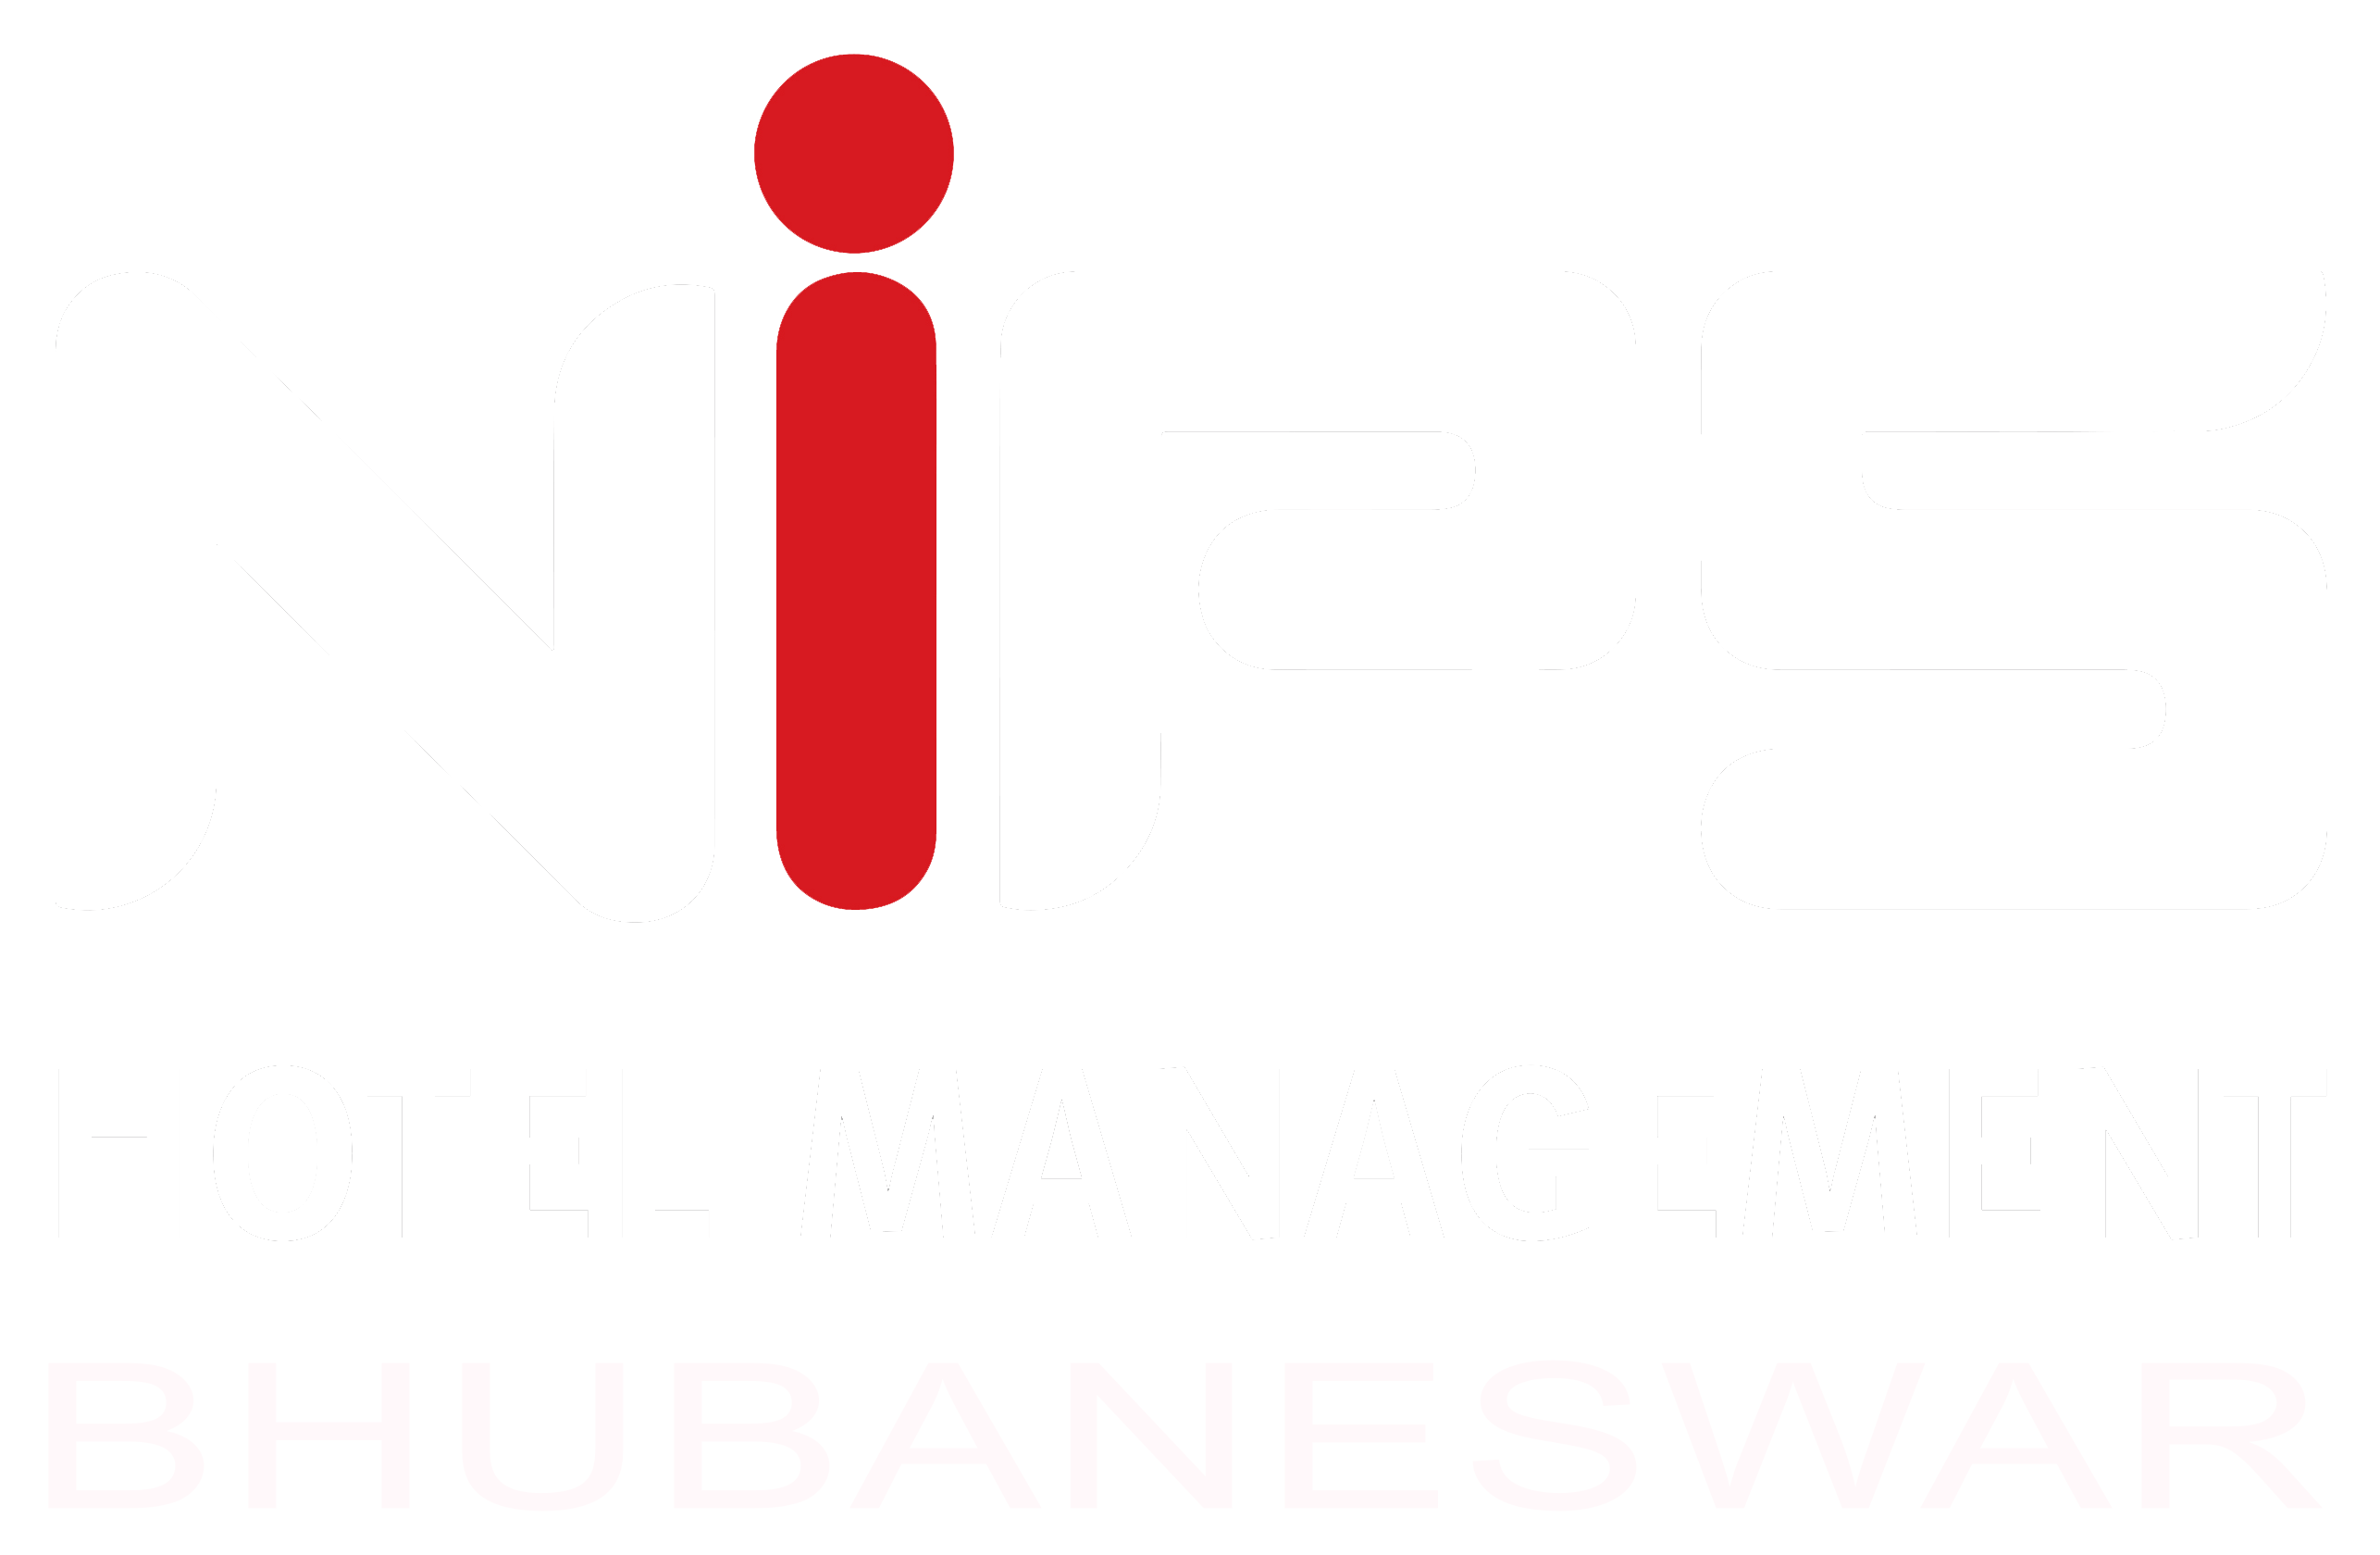 NIPS Hotel Management Institute in Bhubaneswar 